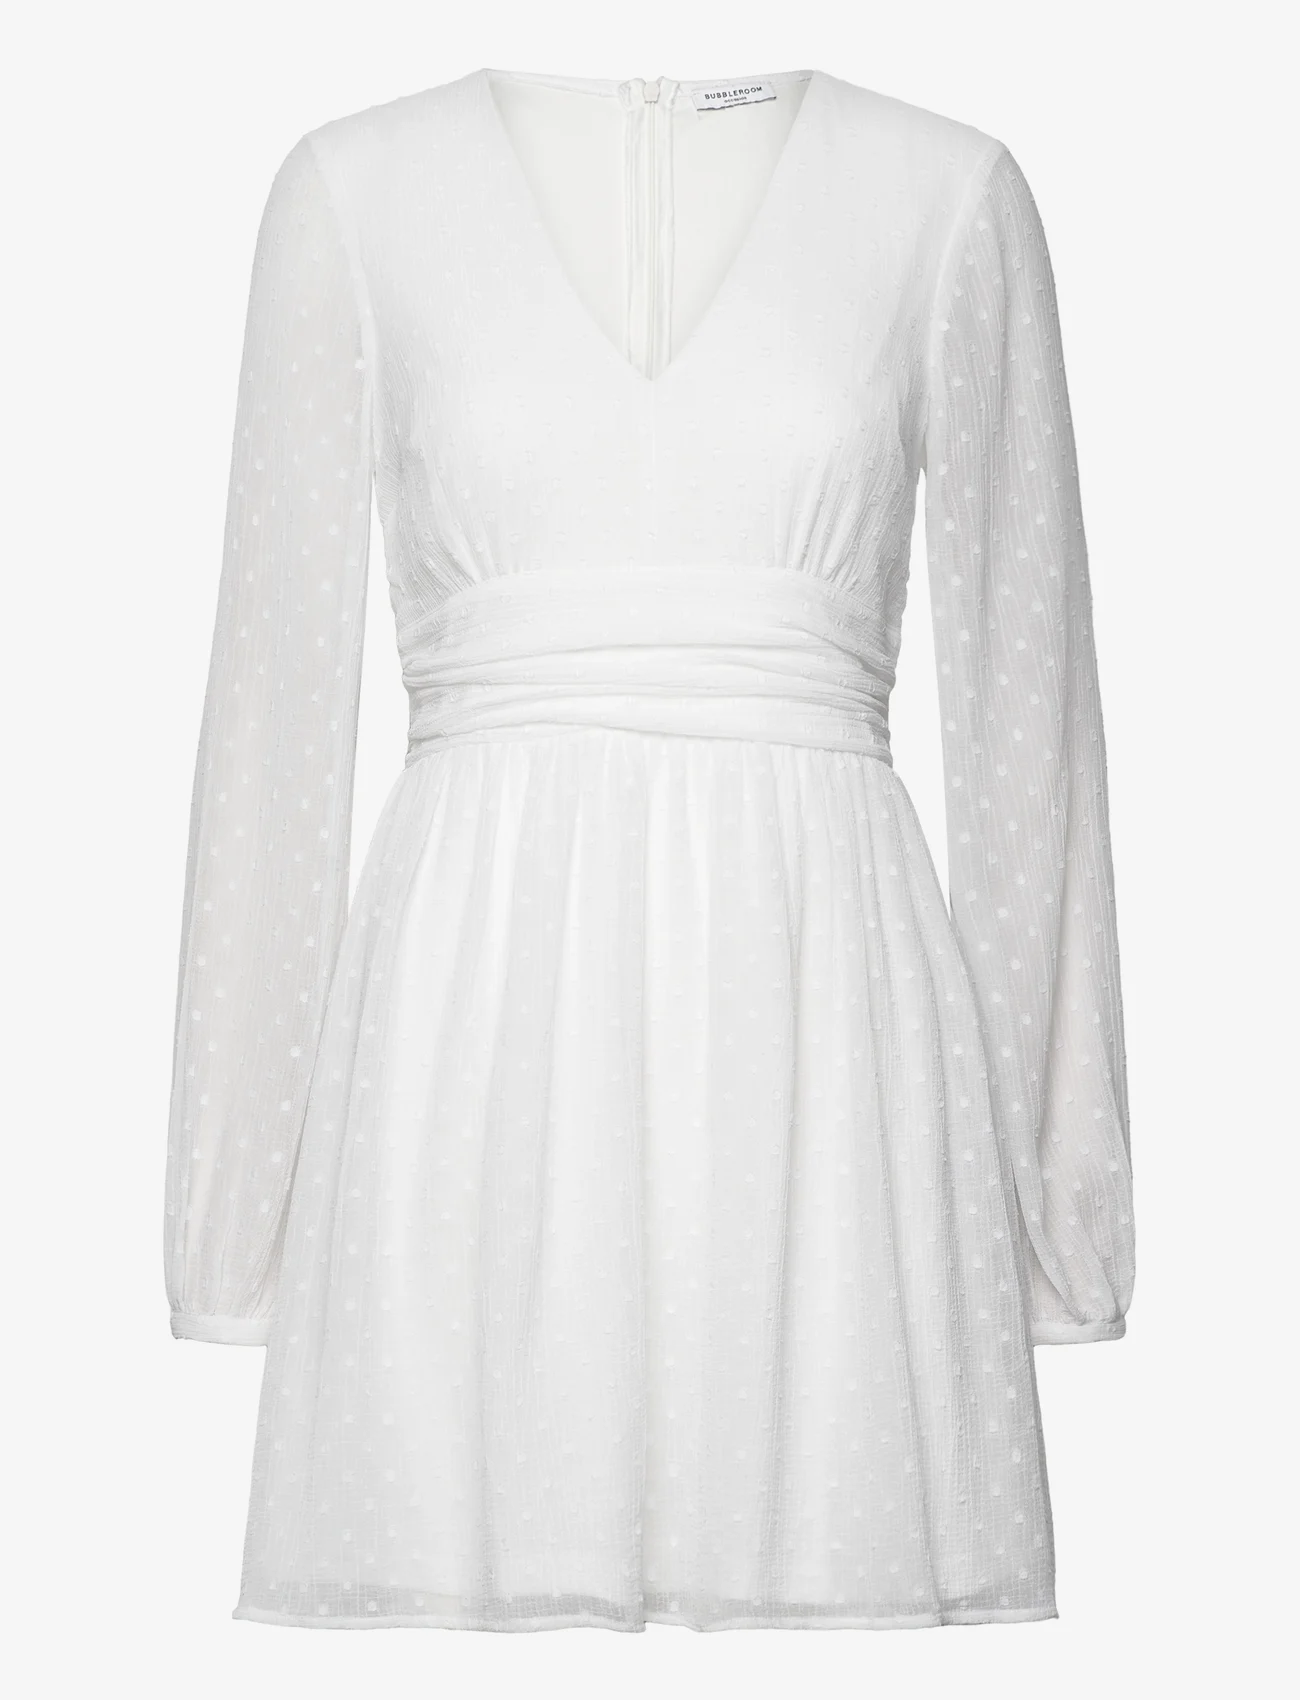 Bubbleroom - Dahlia Dotted Dress - kesämekot - white - 0